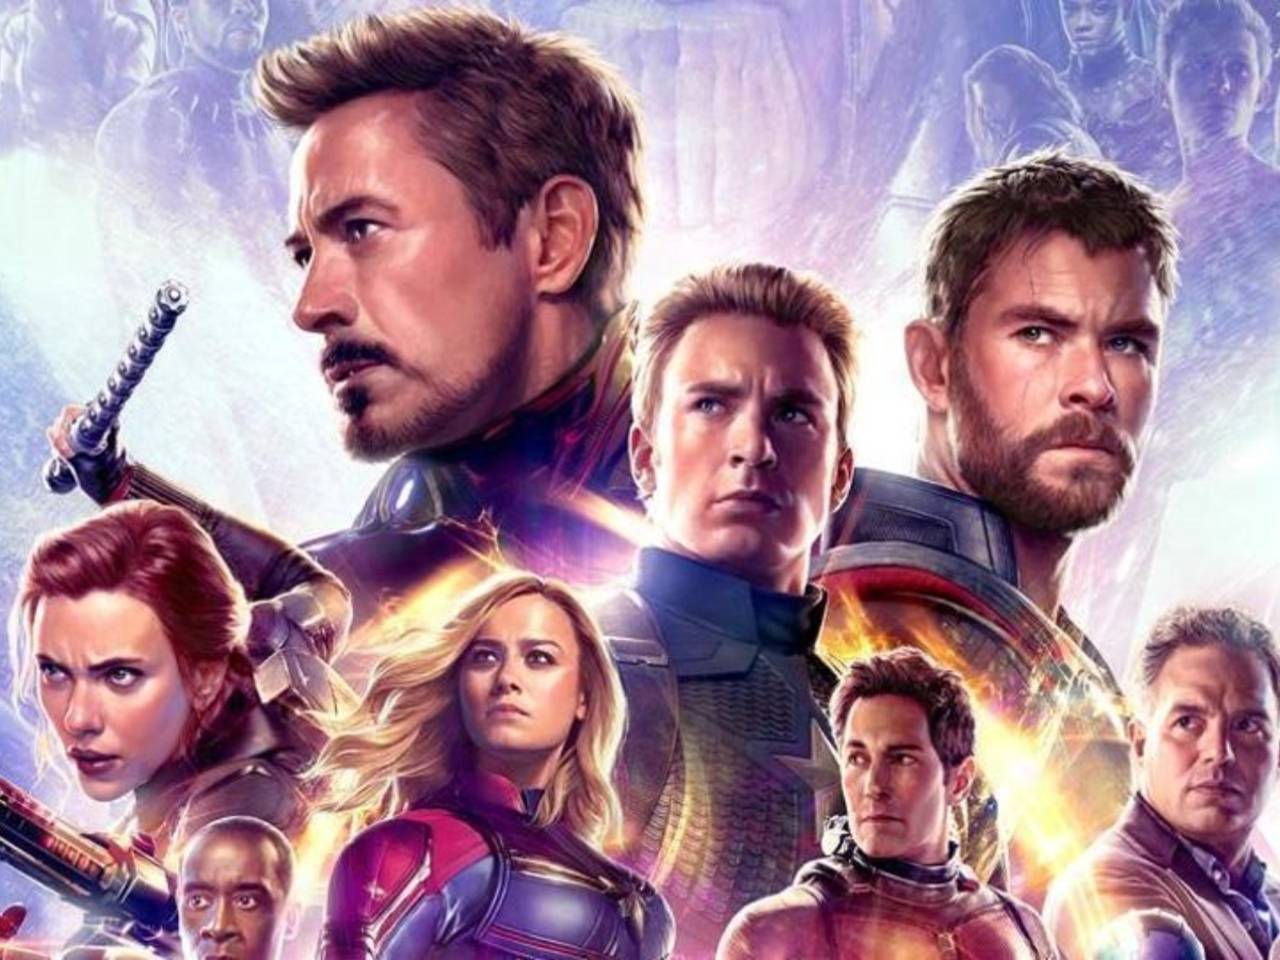 Avengers Endgame Box Office Day 1 Marvel Superheroes Creates